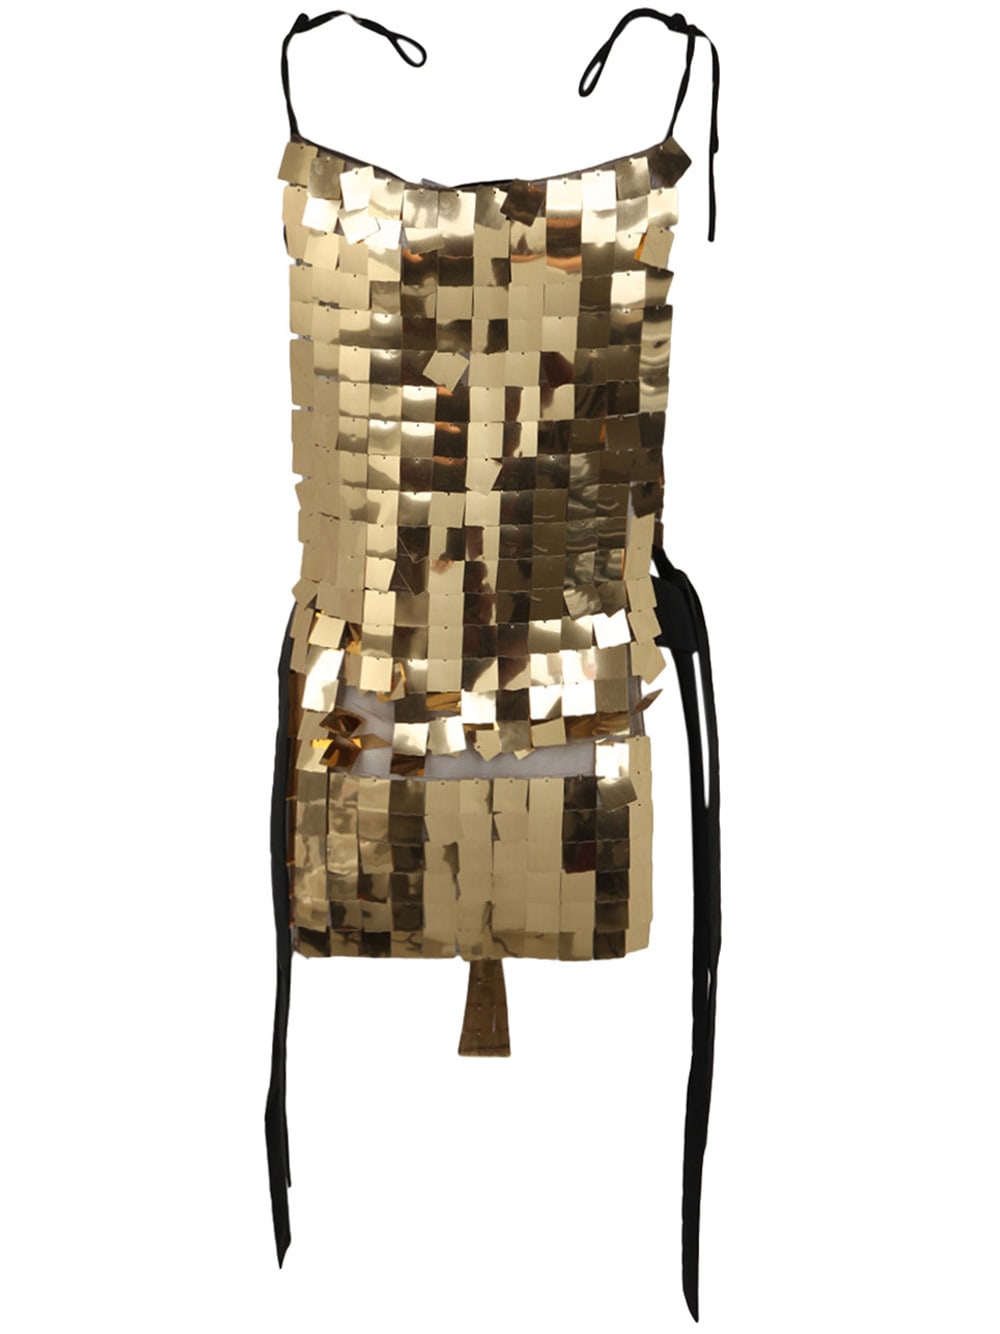 Shop Maria Calderara Corazza Macro Square Sequins On Tulle Dress In Gold Black Taffeta Ribbons